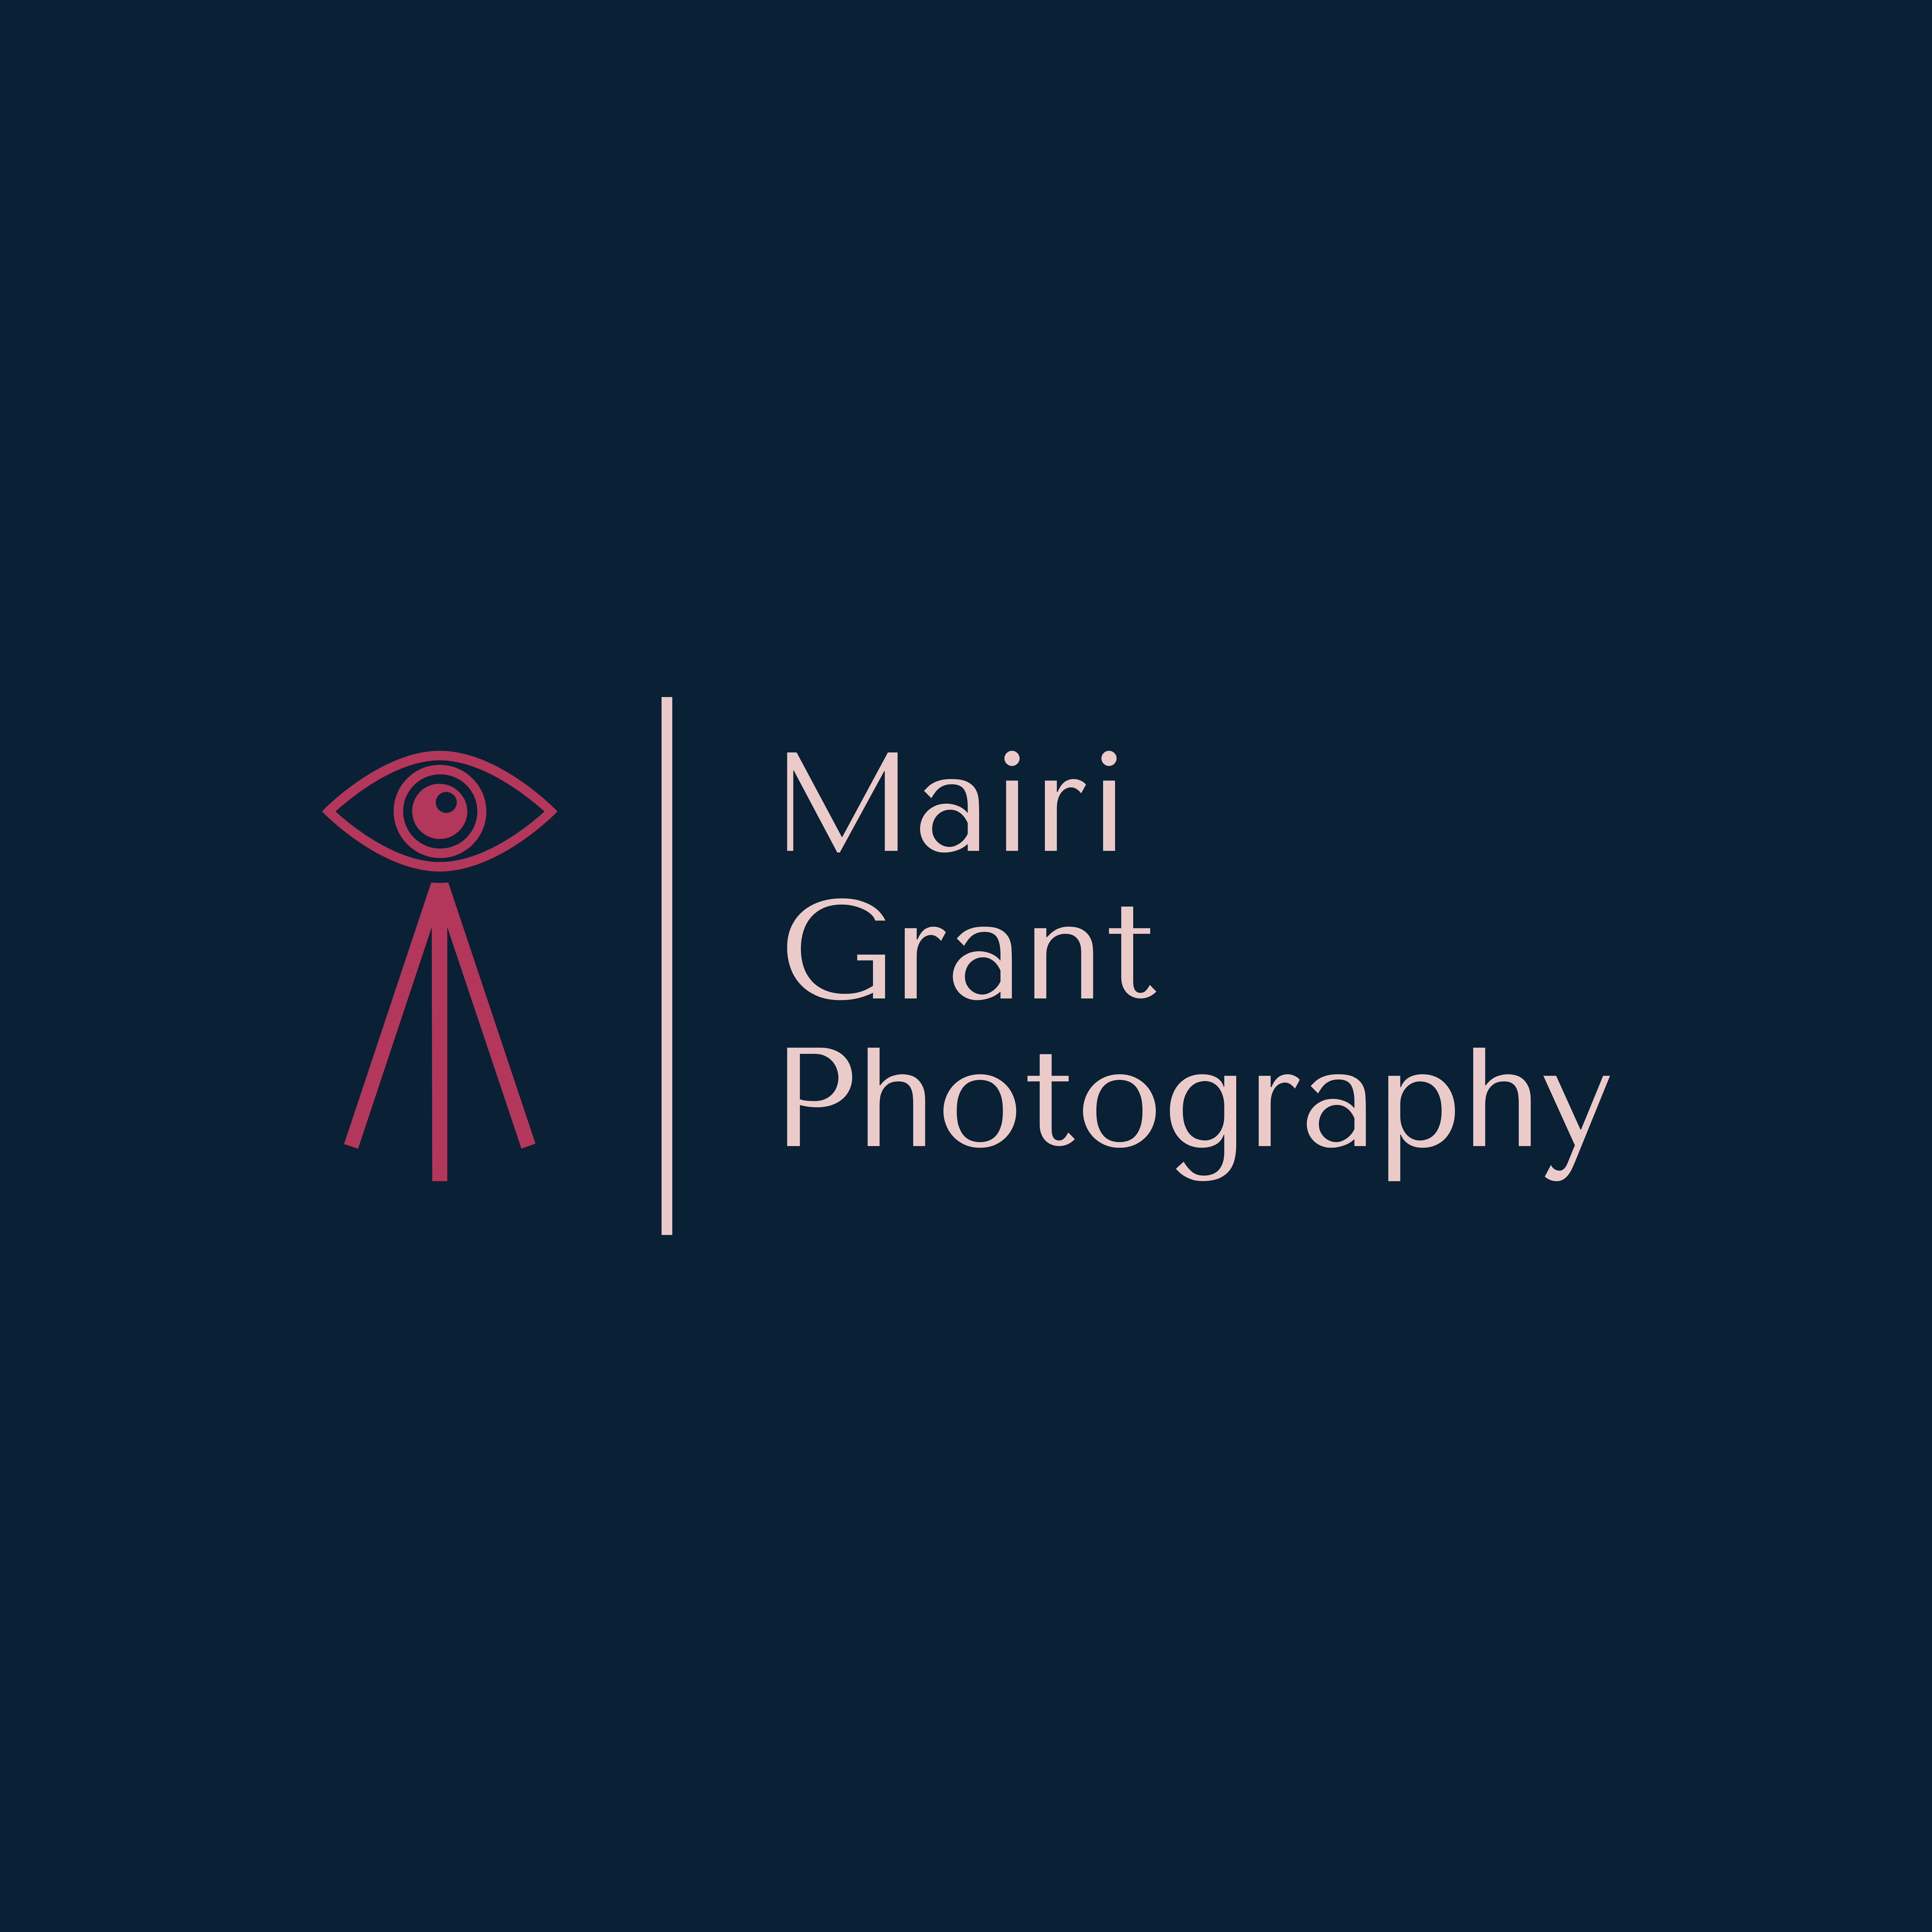 Mairi Grant Photography